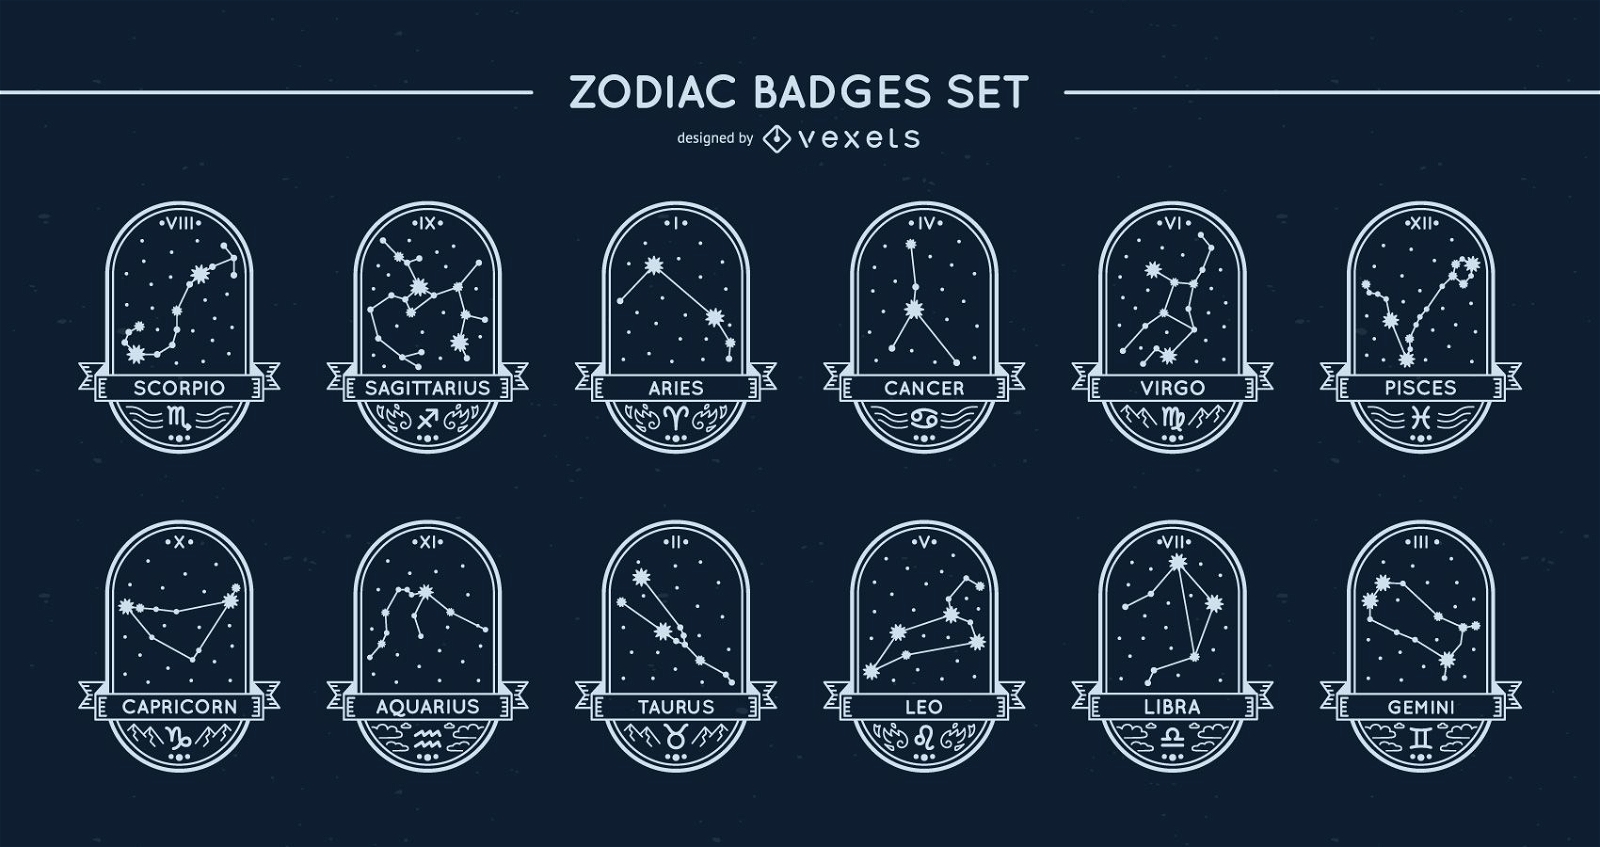 Zodiac badges stars set